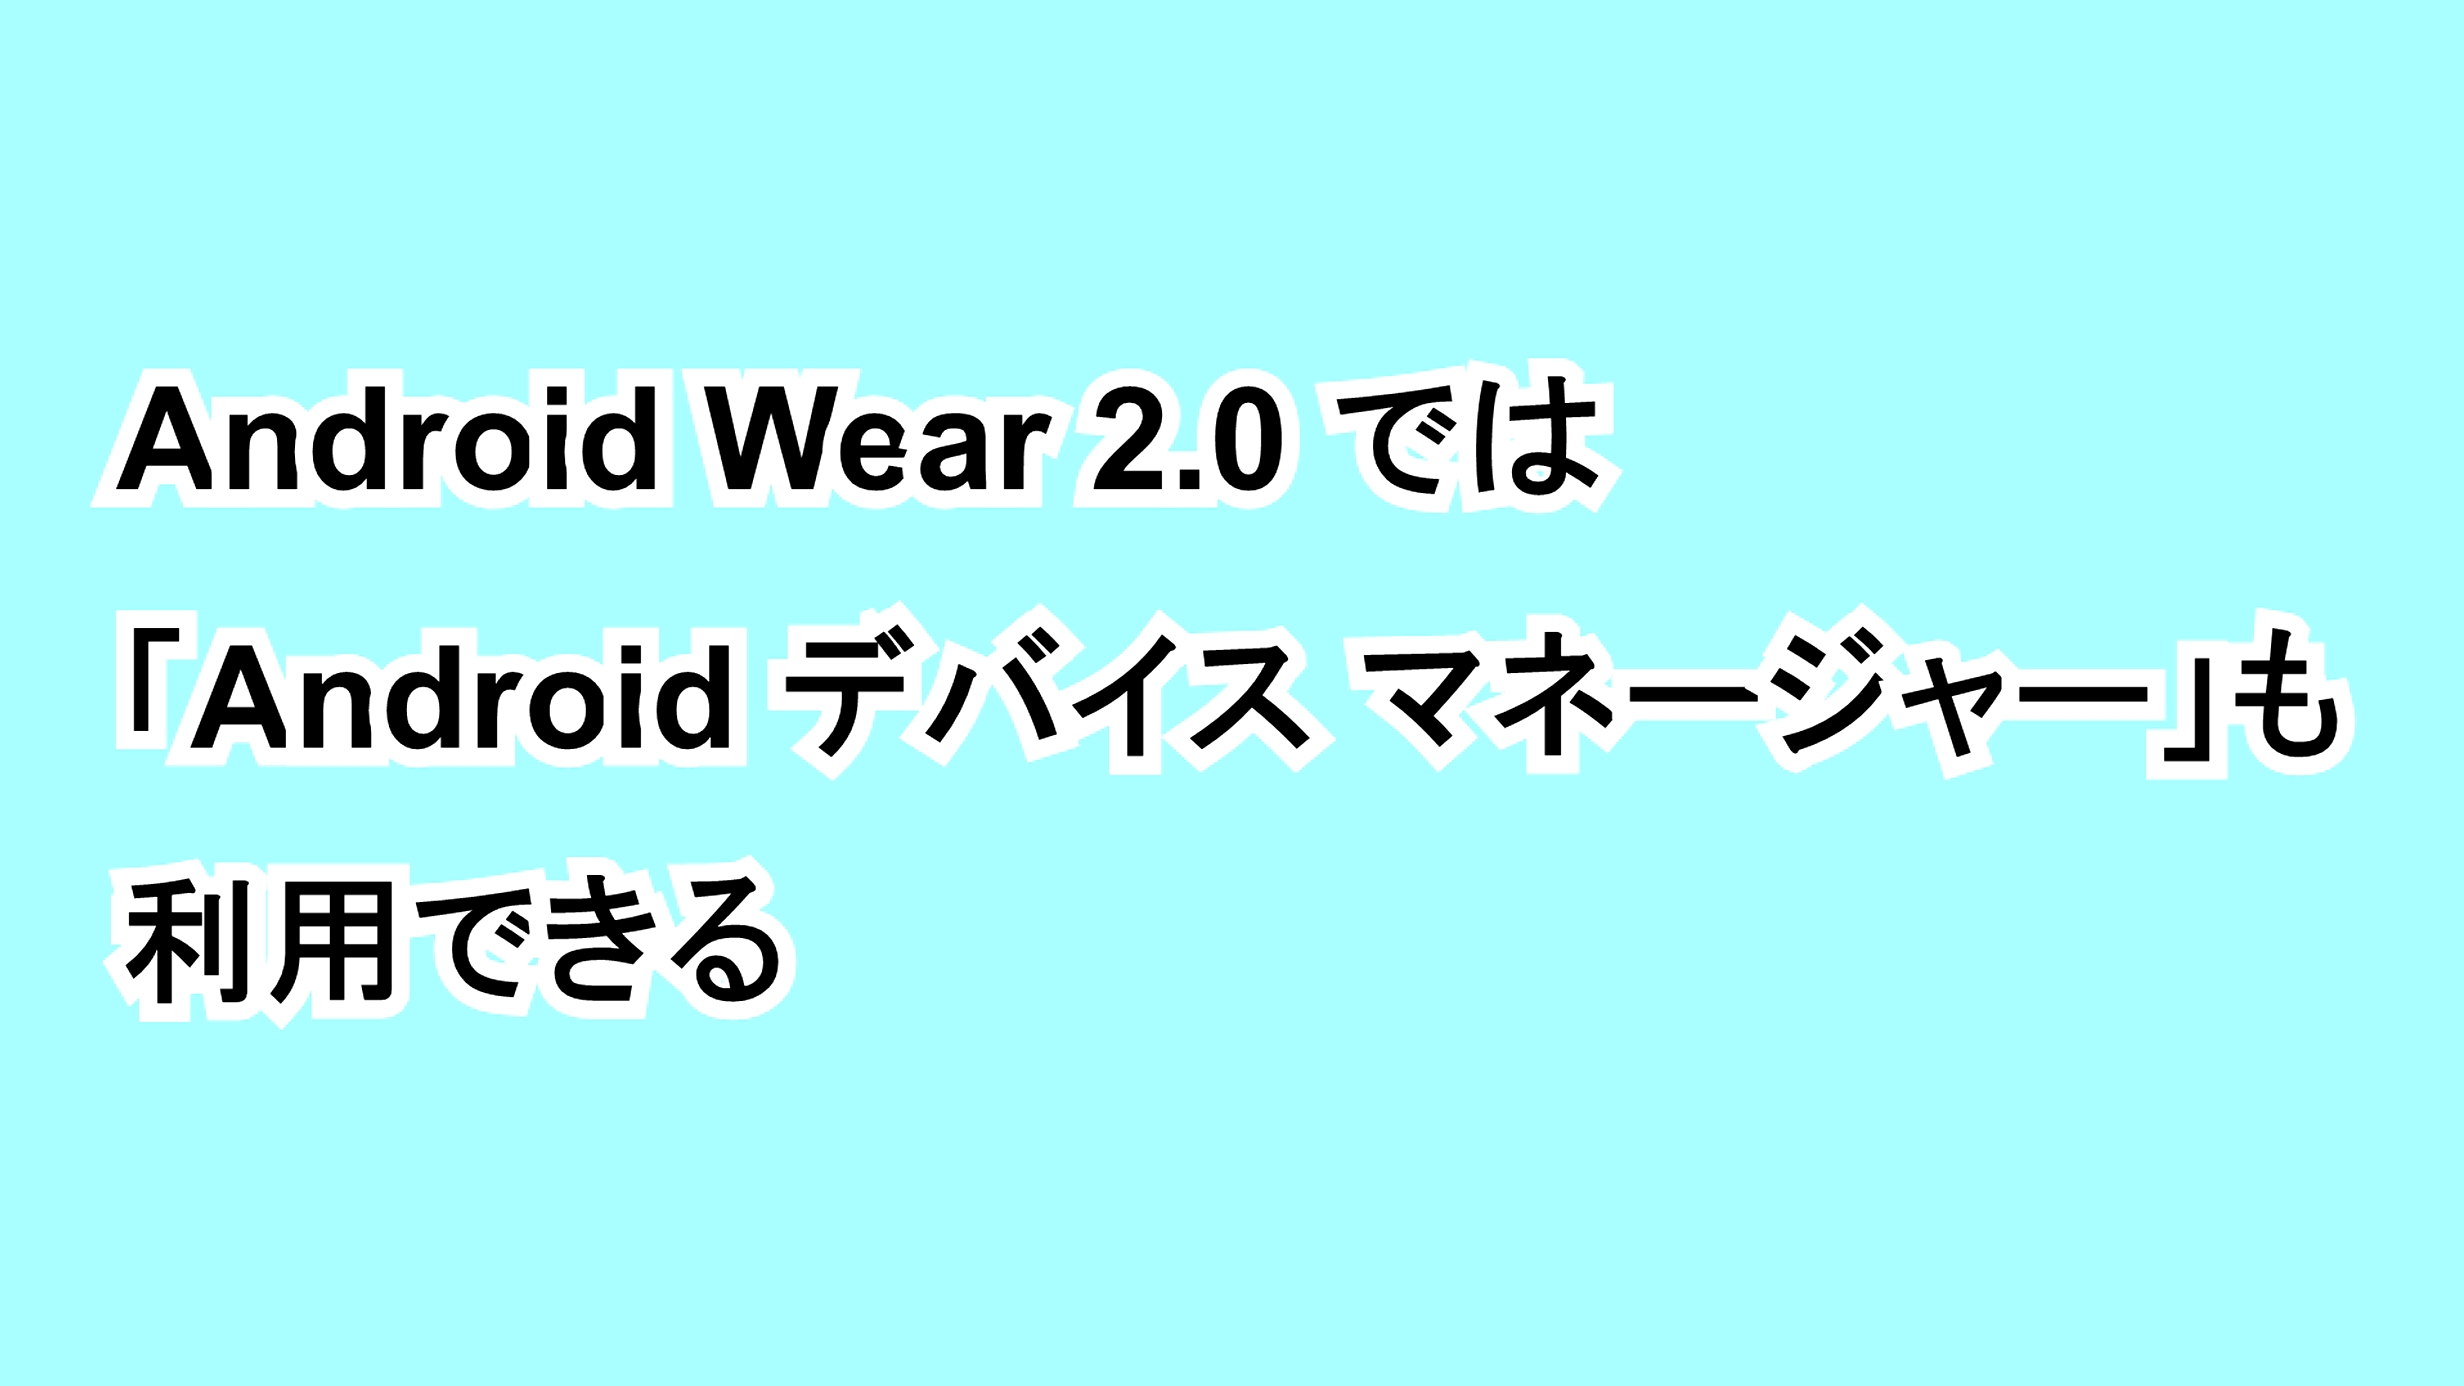 Android Wear 2.0では「Android デバイス マネージャー」も利用できる